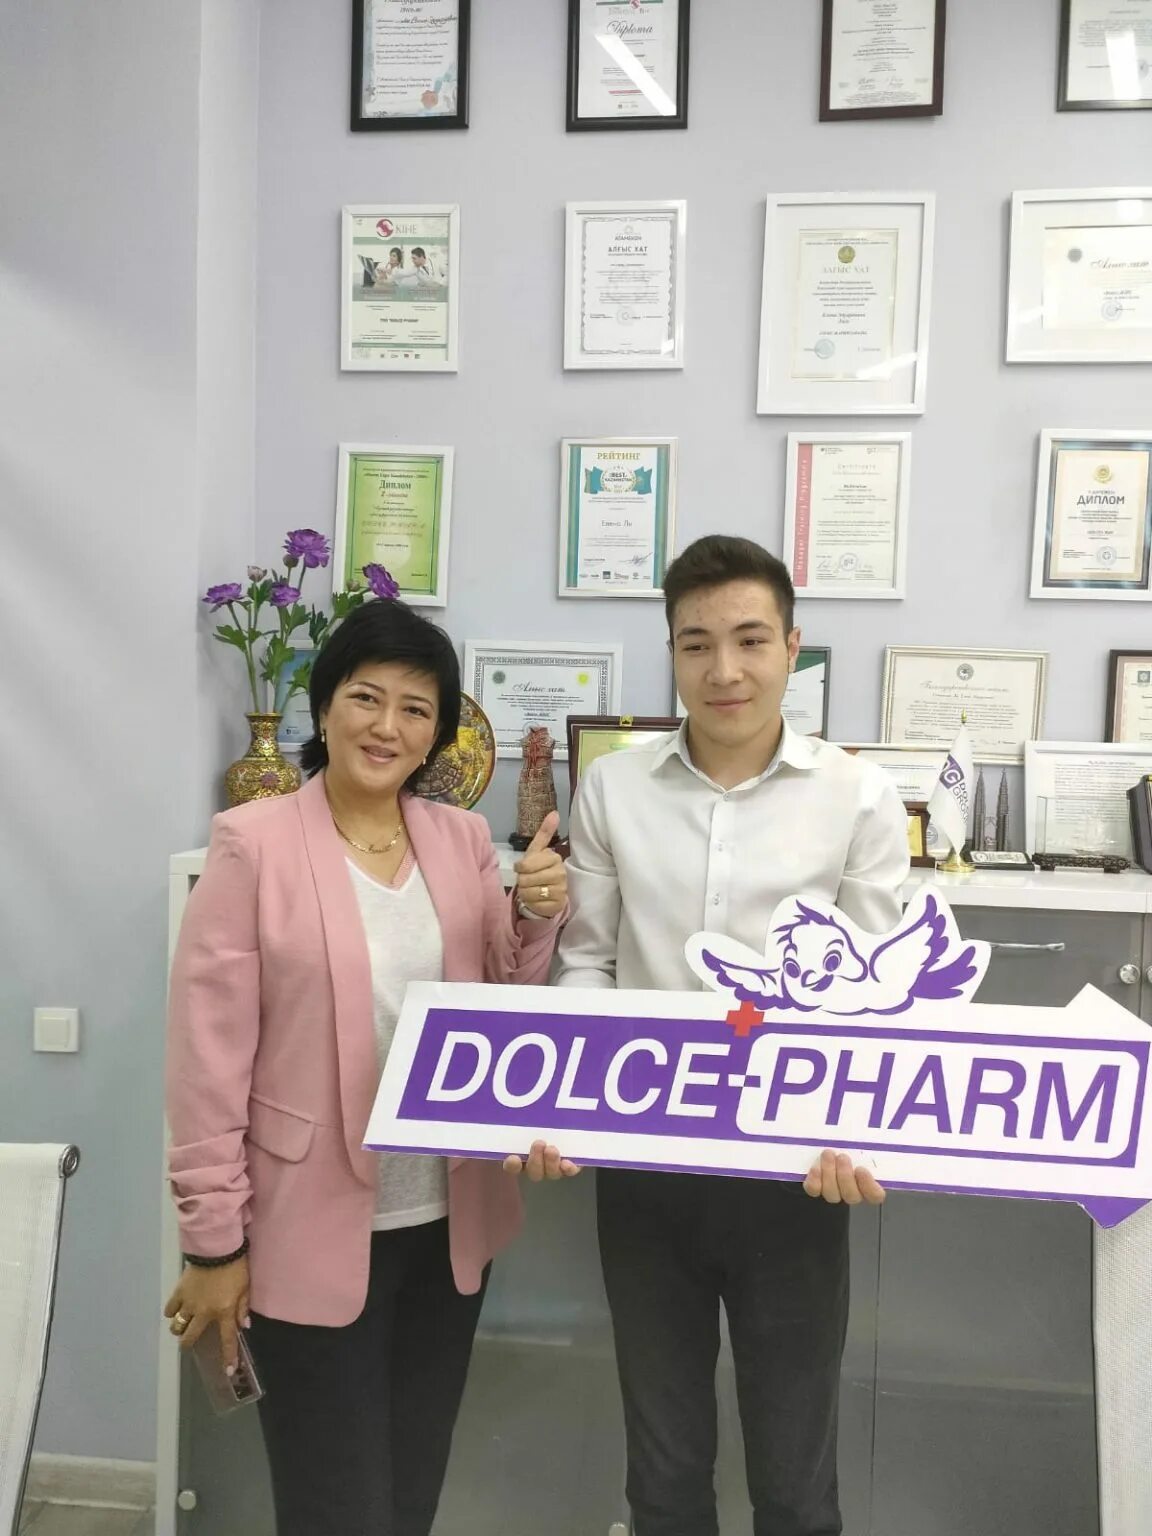 Dolce-Pharm. Dolce Pharm фармацевтическая компания. Встреча молодые специалисты в колледже. Dolce Pharm Казахстан картинка.